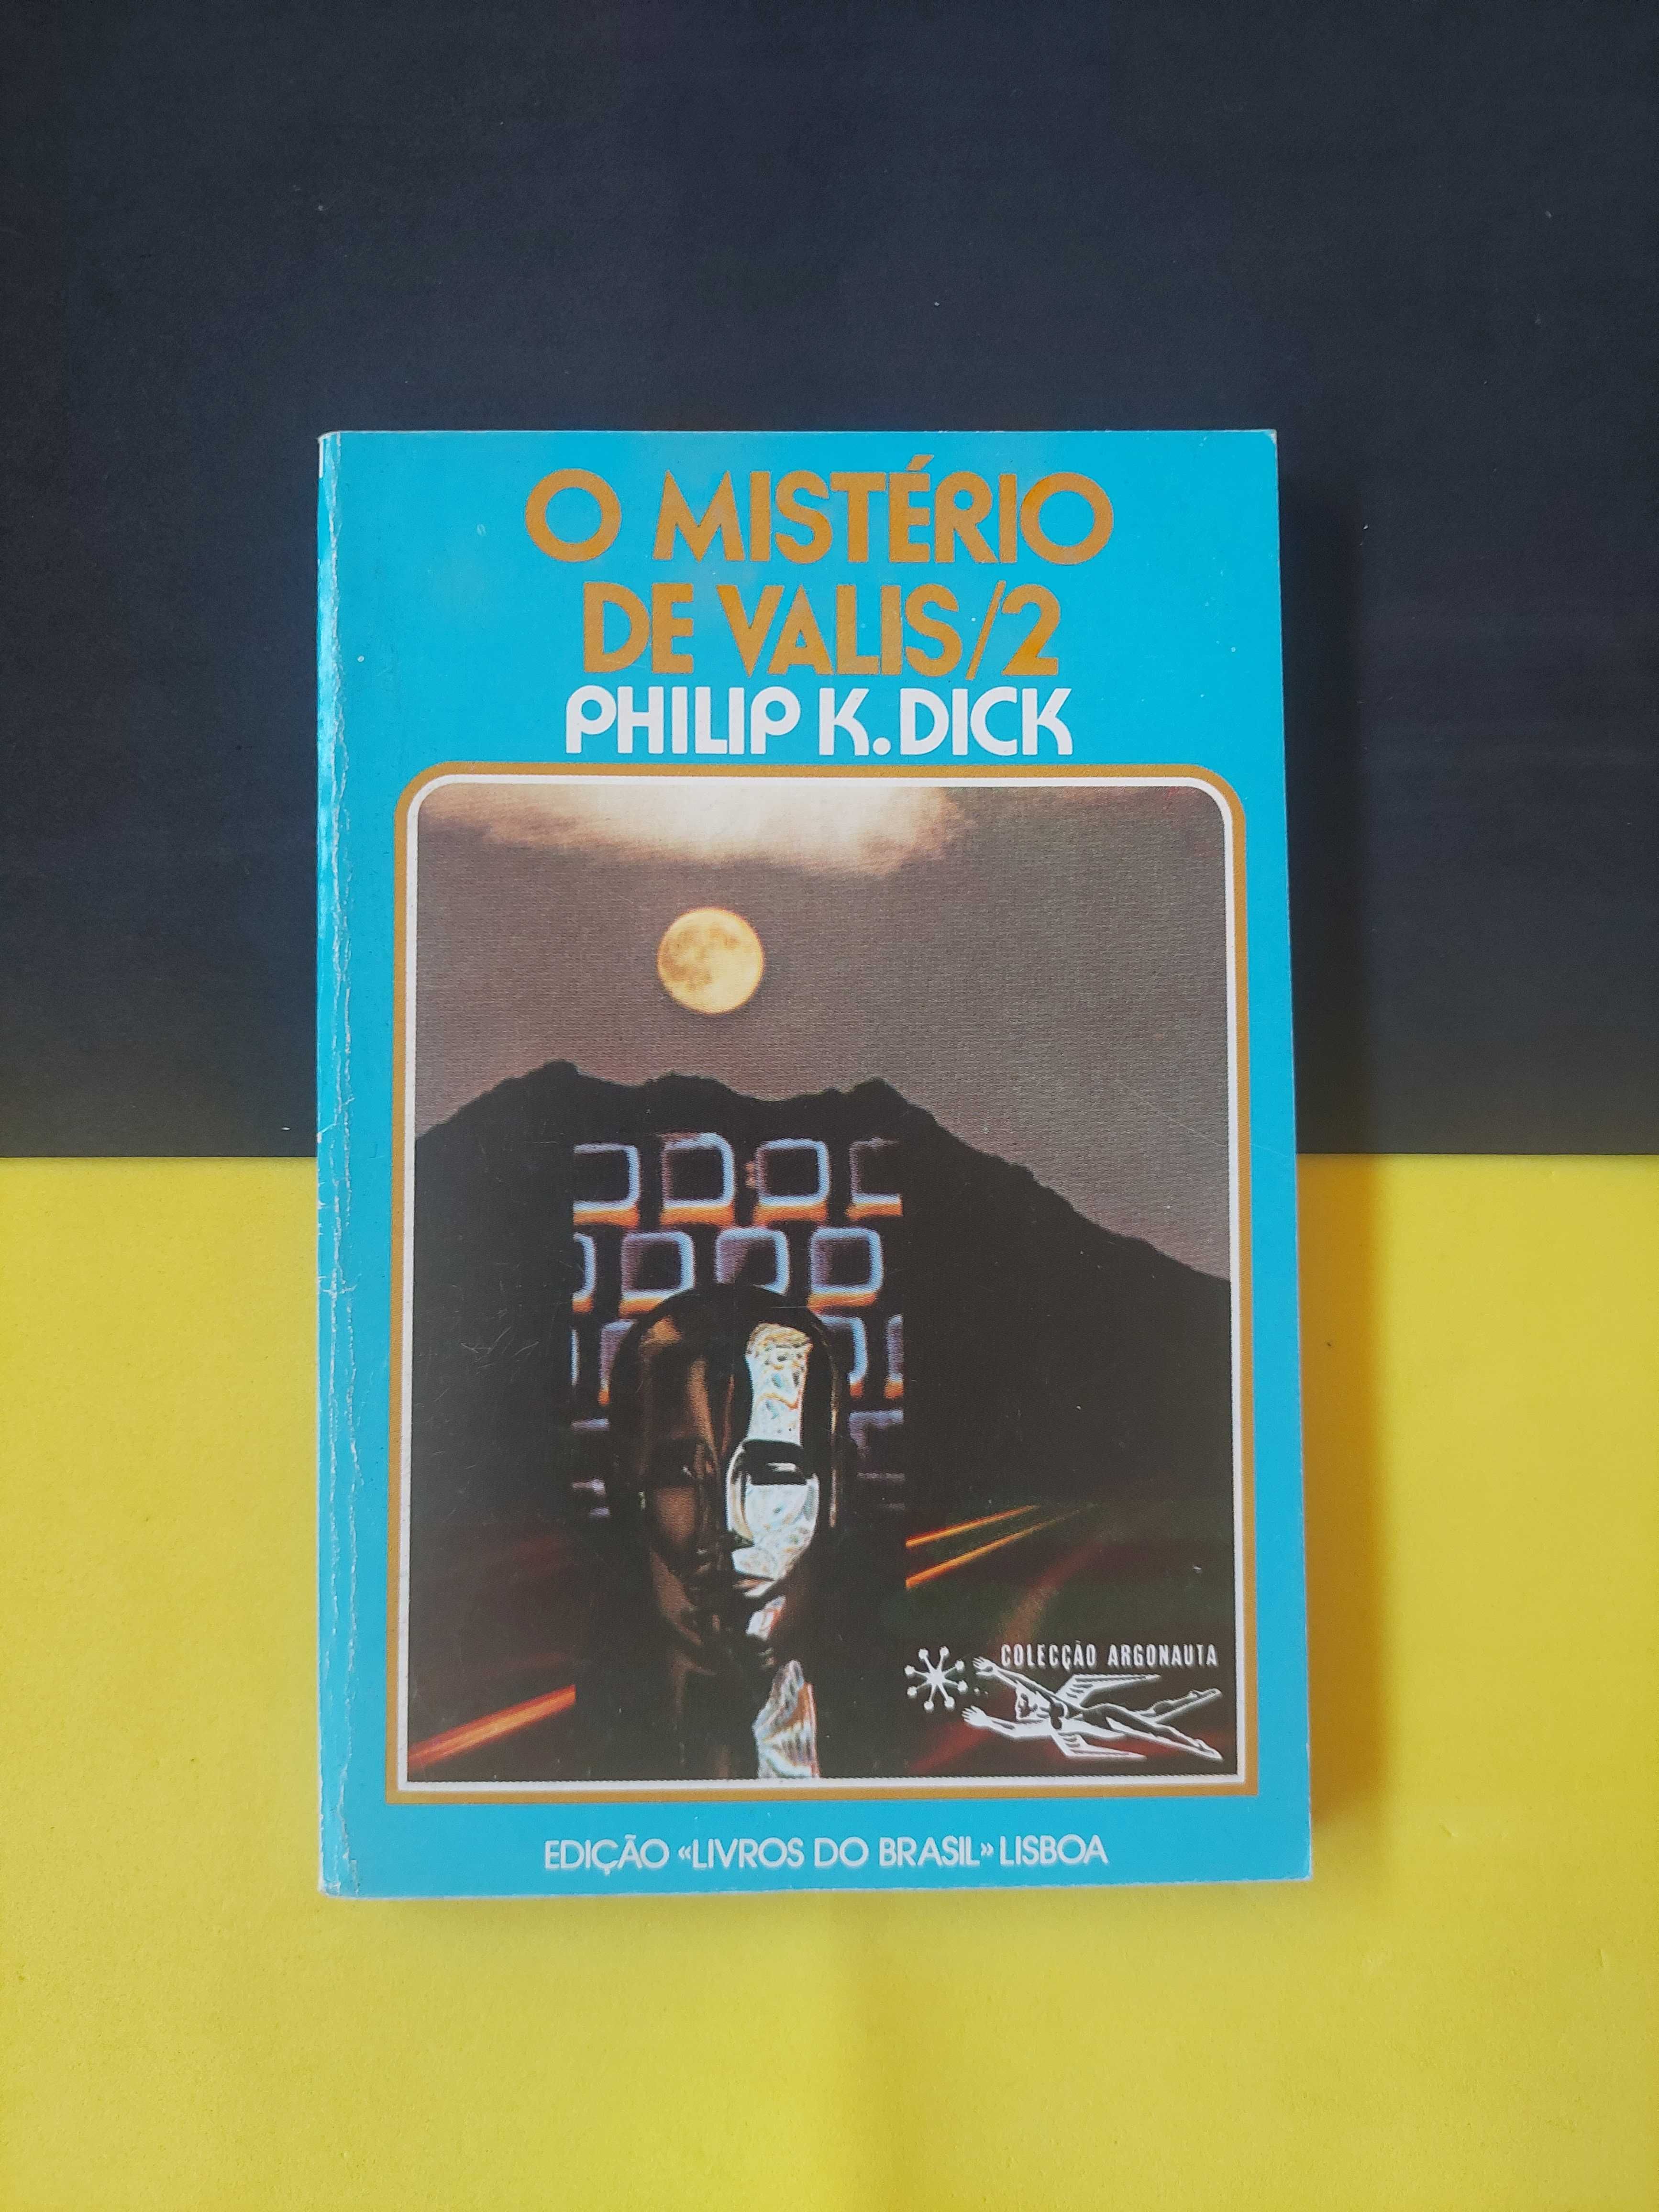 Philip K. Dick - O mistério de valis. Volumes 1 e 2